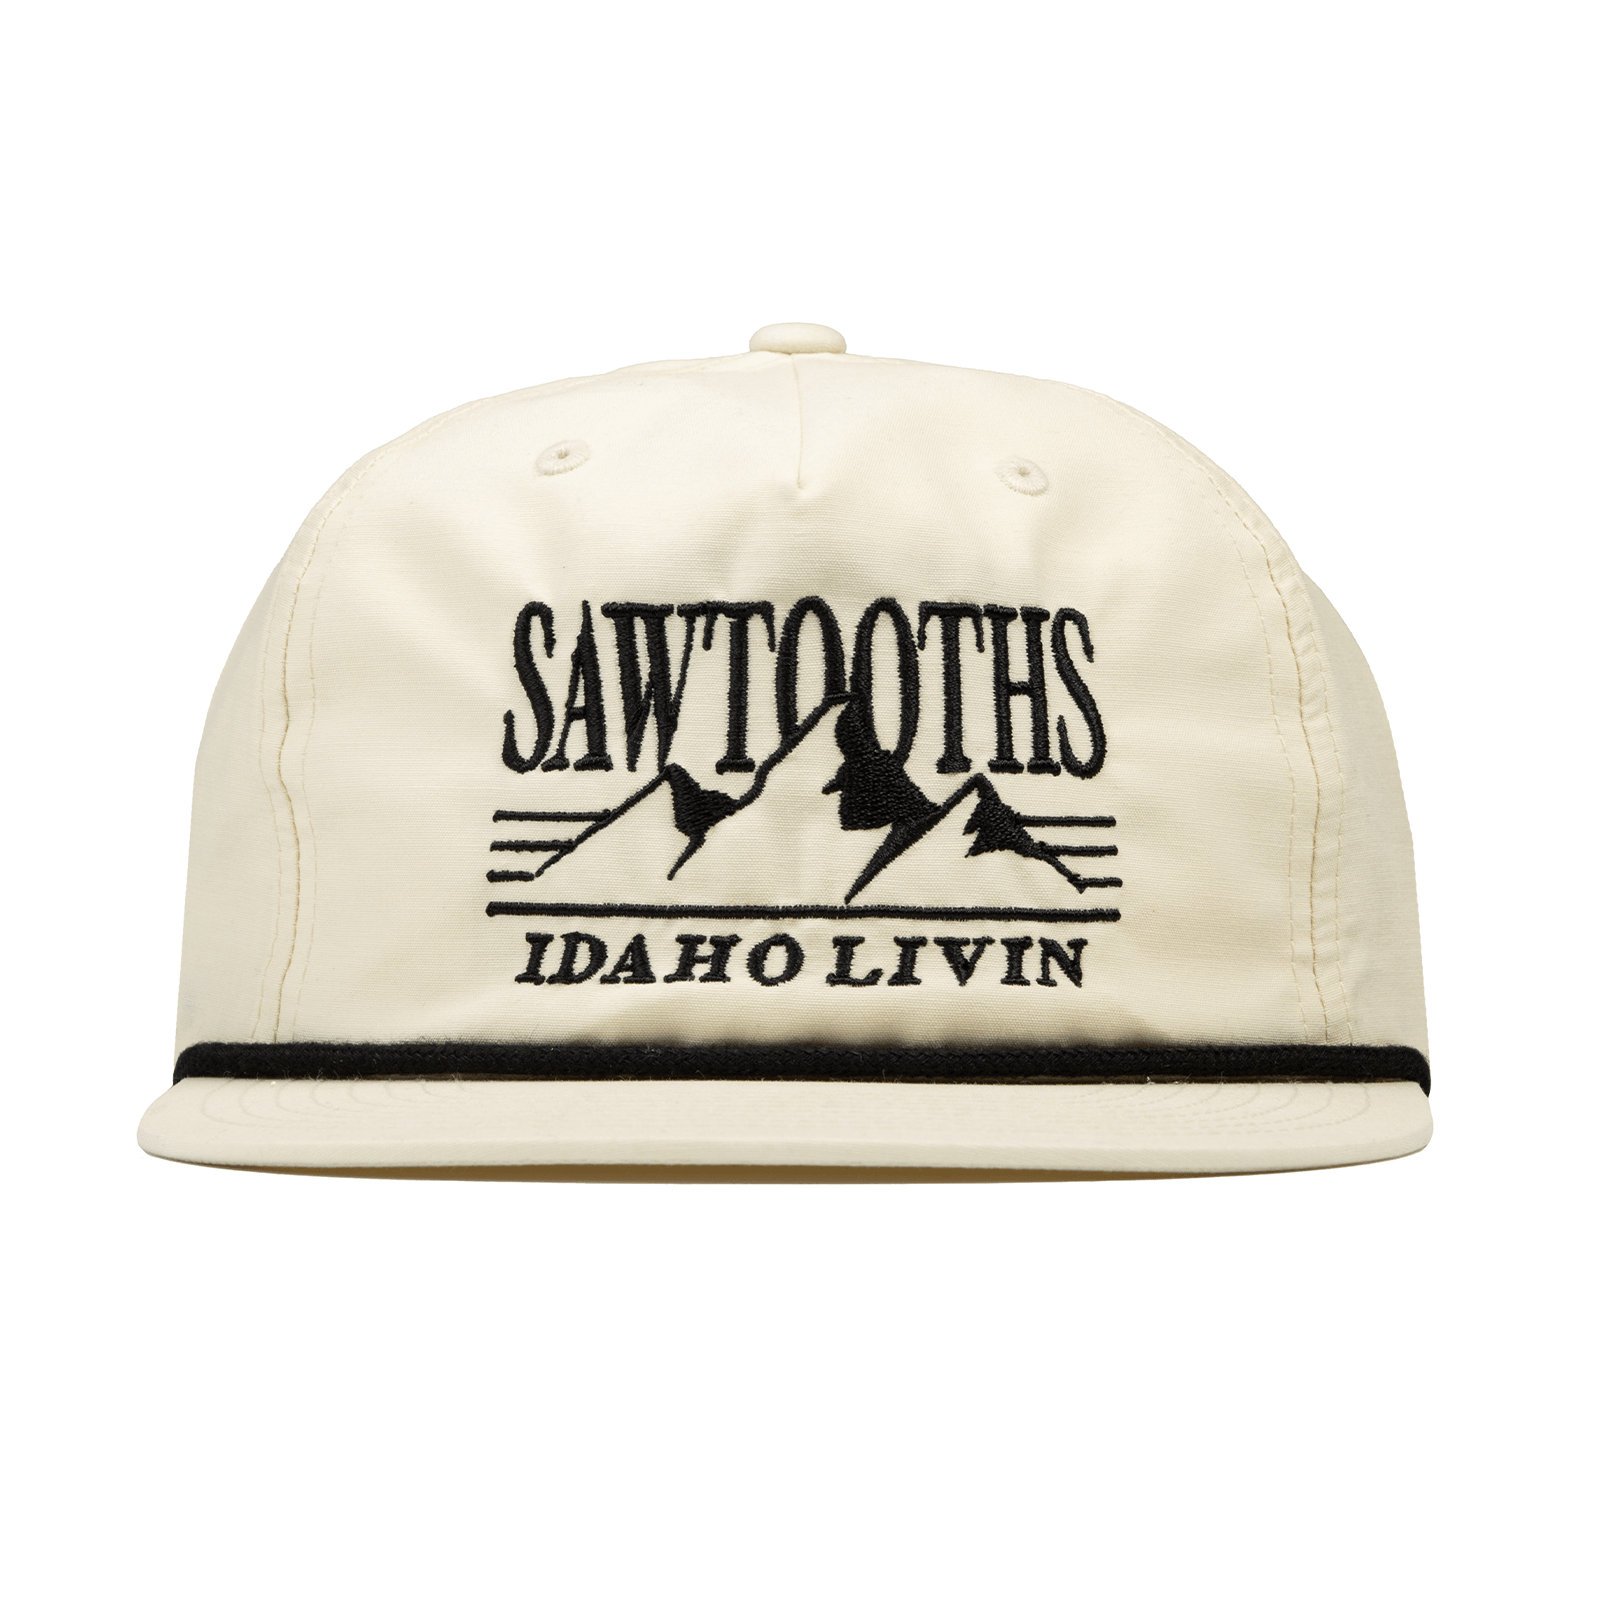 Sawtooth Rope Hat - Idaho Livin